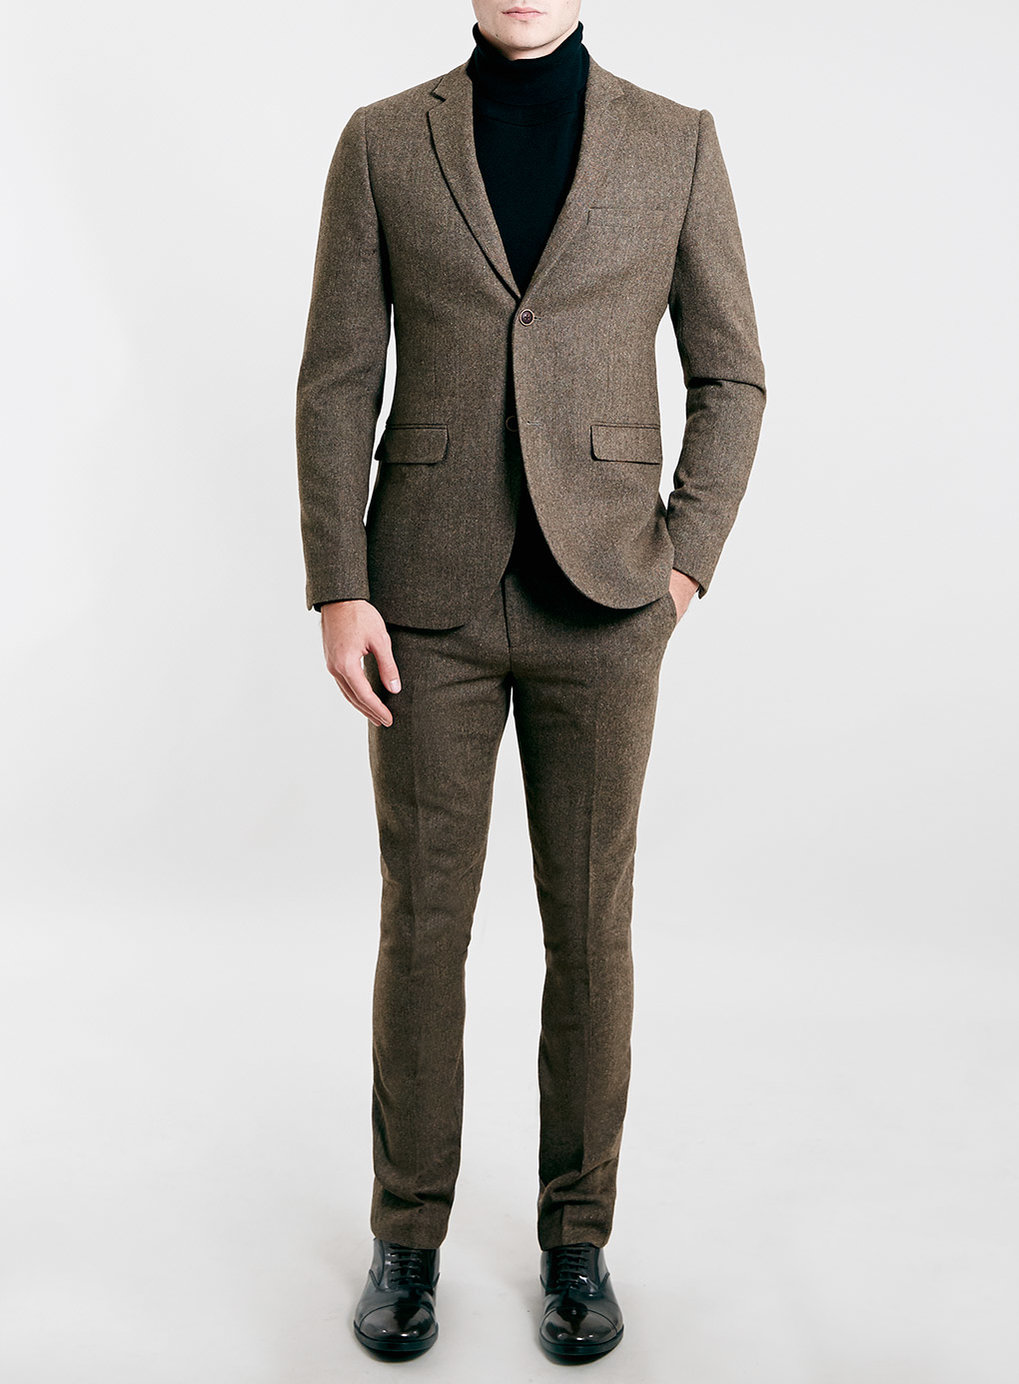 Best Luxury Men's Suit Brands 2020 | Literacy Ontario Central South